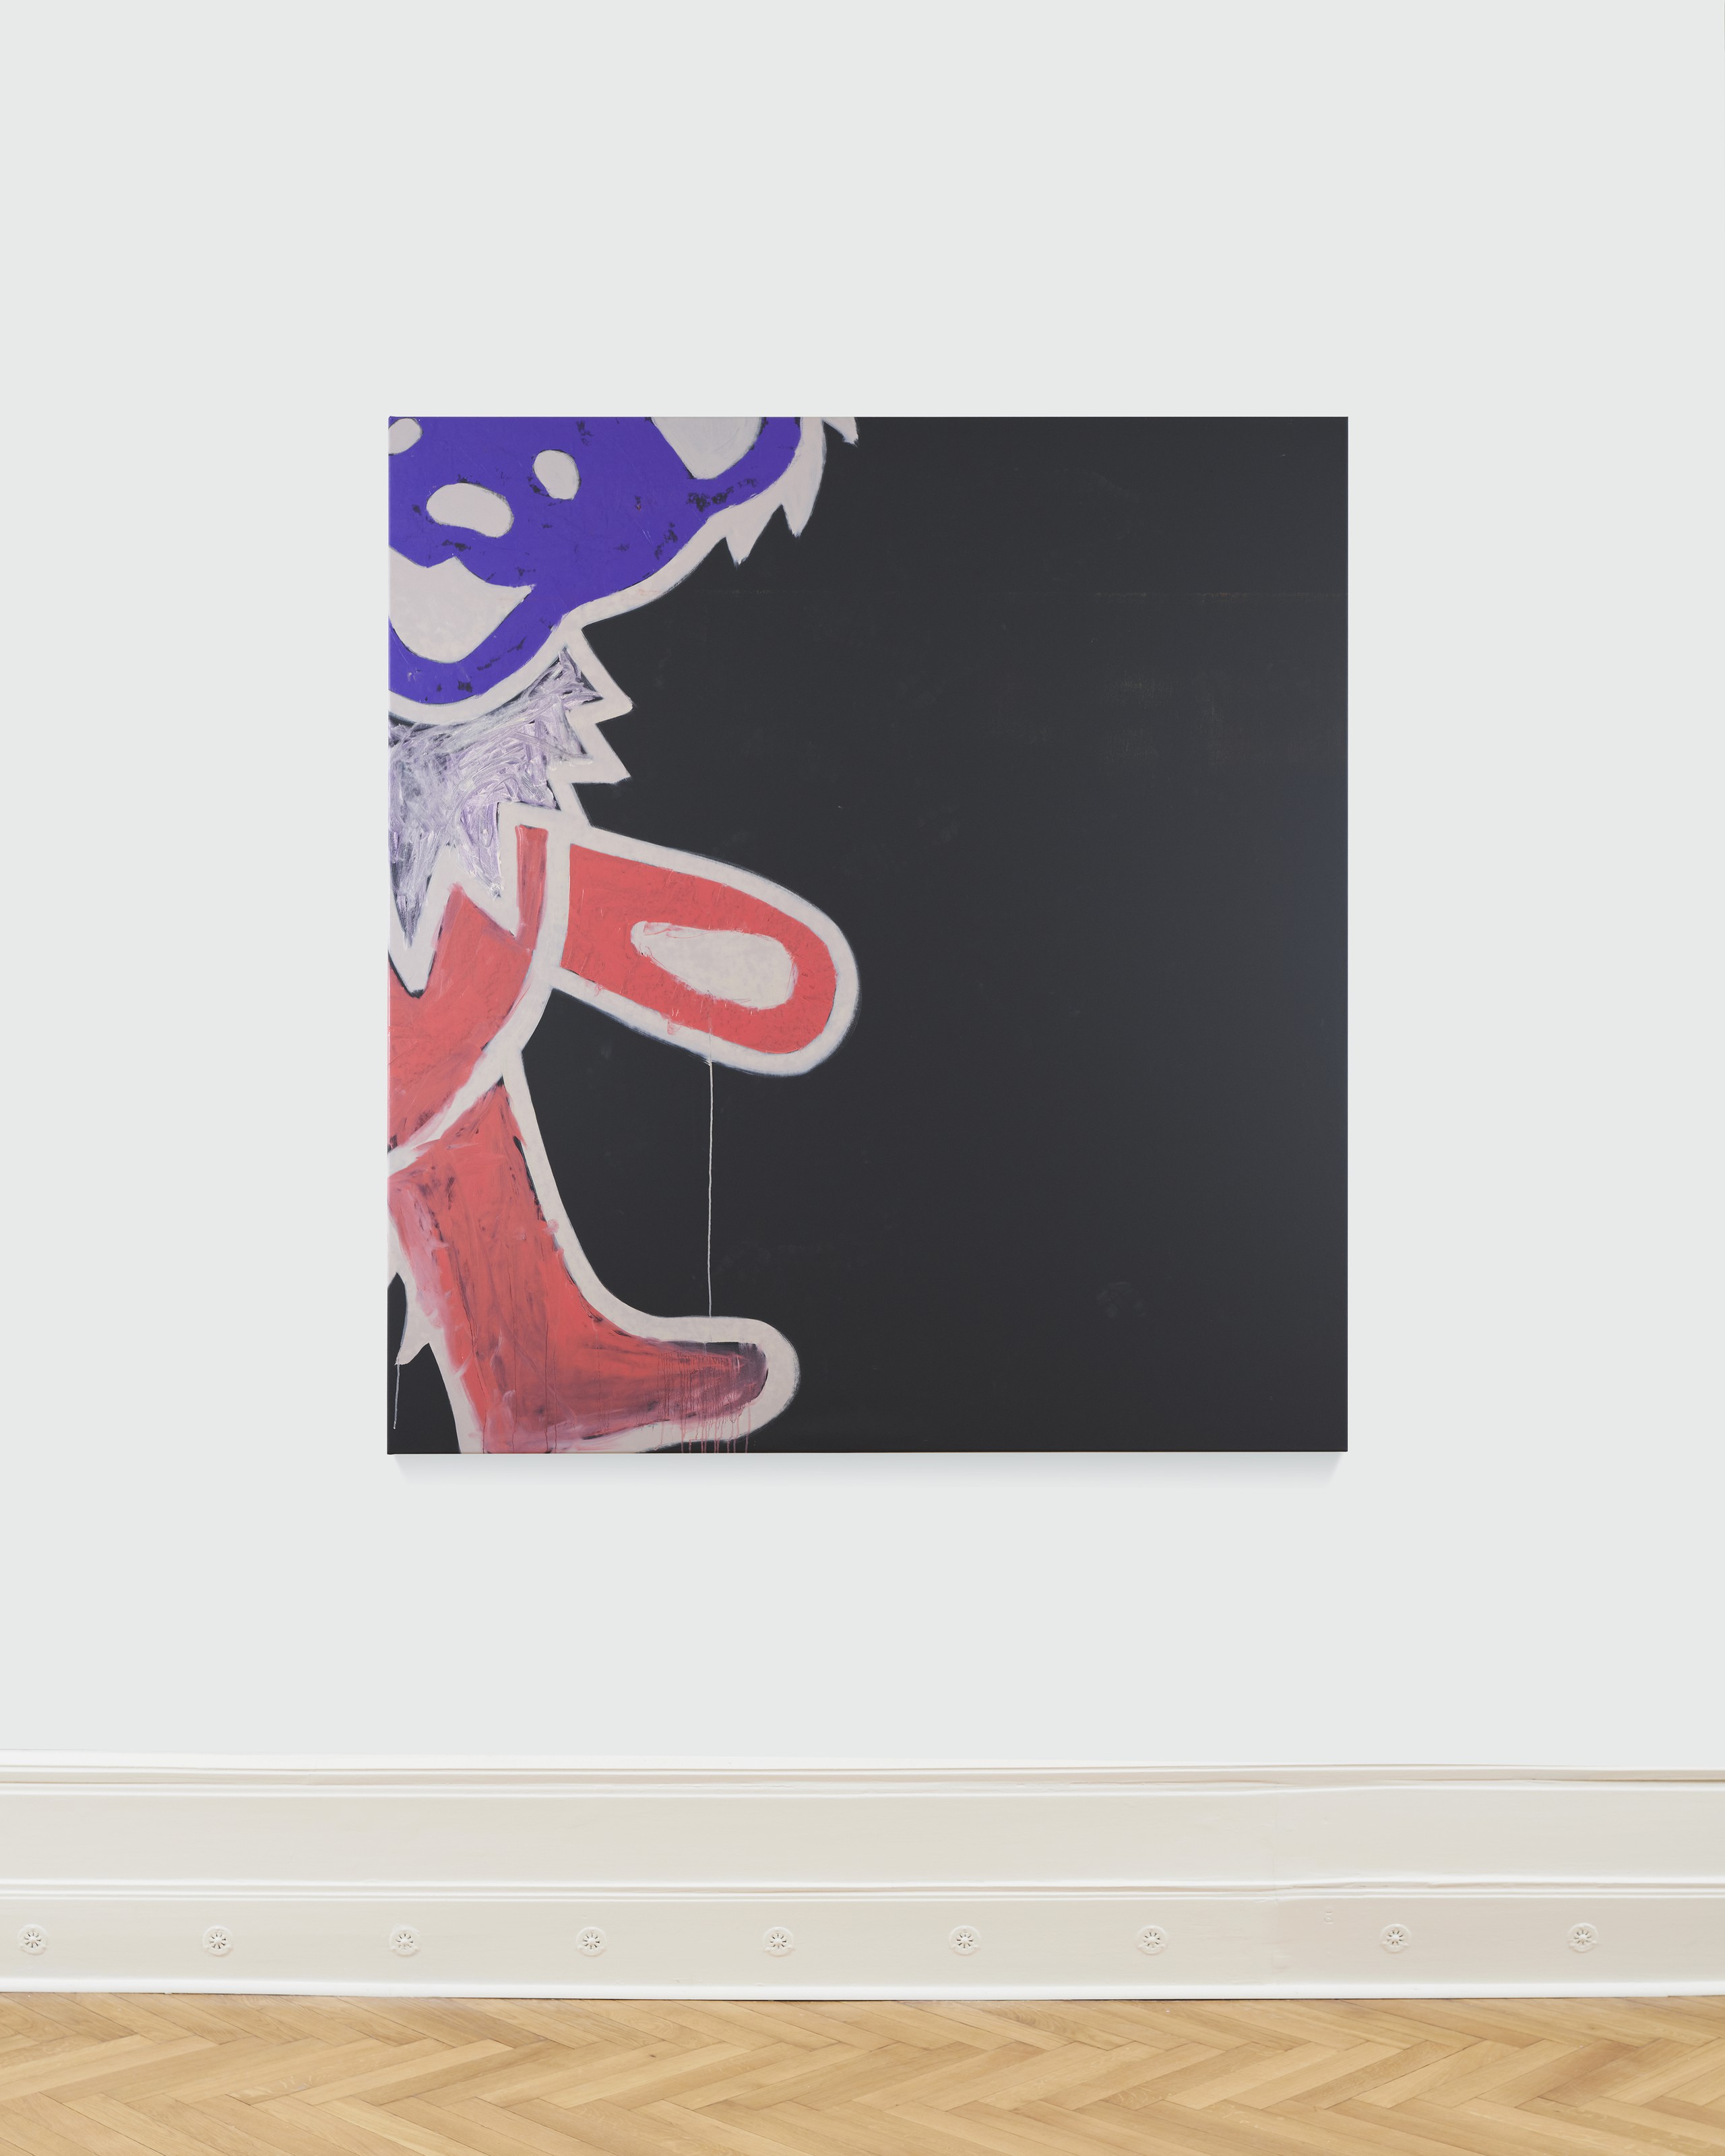 Tina Braegger, Les fleurs du mal, 2021, oil on canvas, 205 x 185 x 4 cm, 80 1/2 x 73 x 1 1/2 in